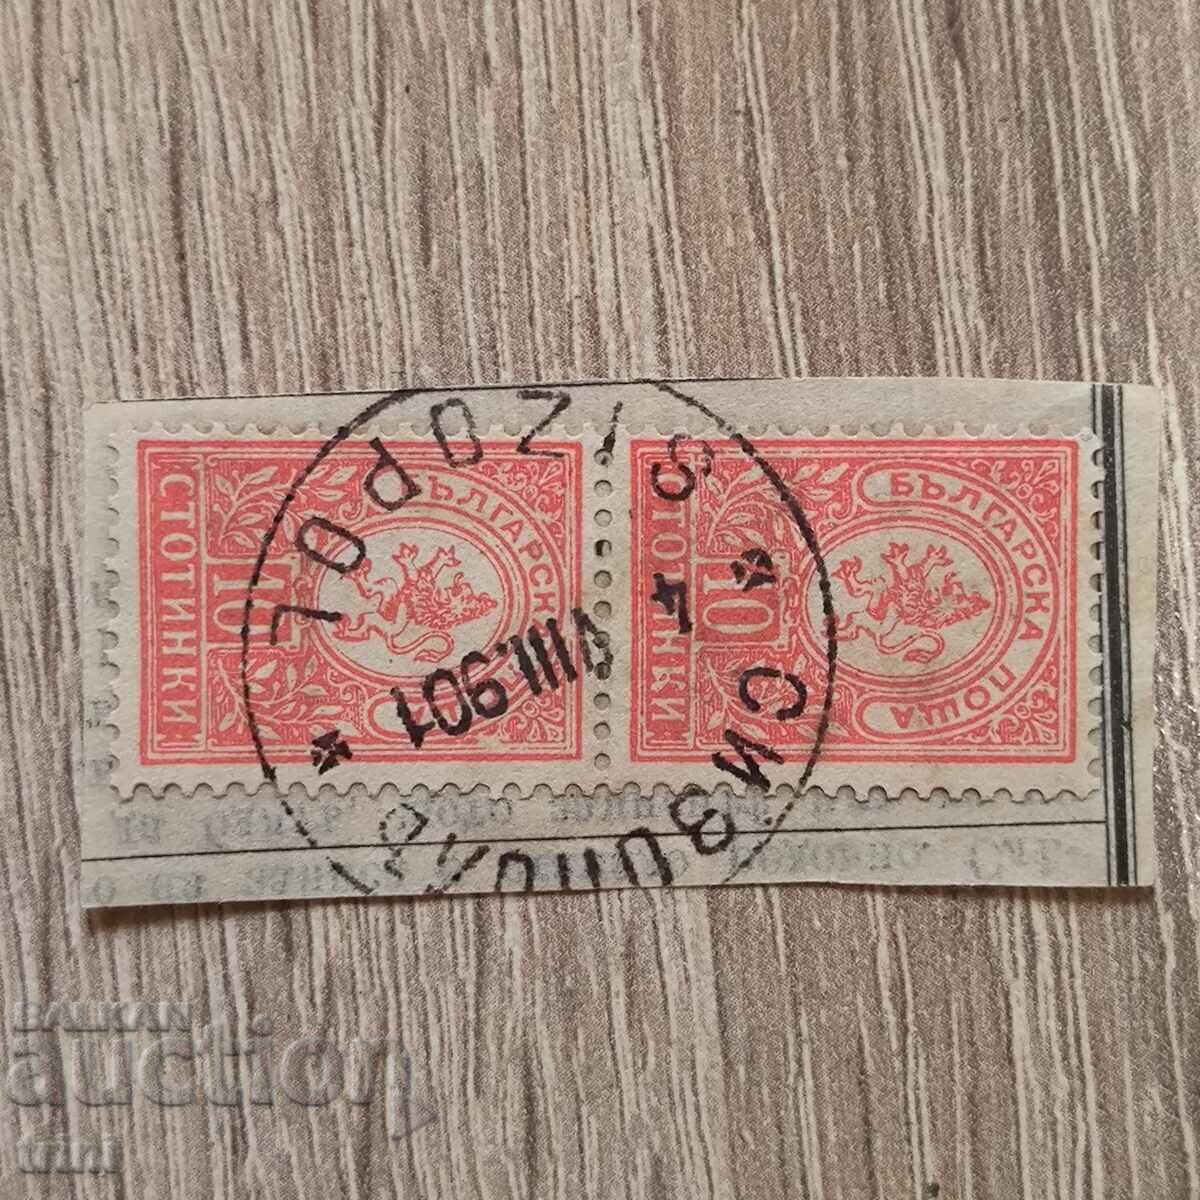 Bulgaria Small Lion 1889 2 X 10th cent γραμματόσημο Sizopol (Sozopol)